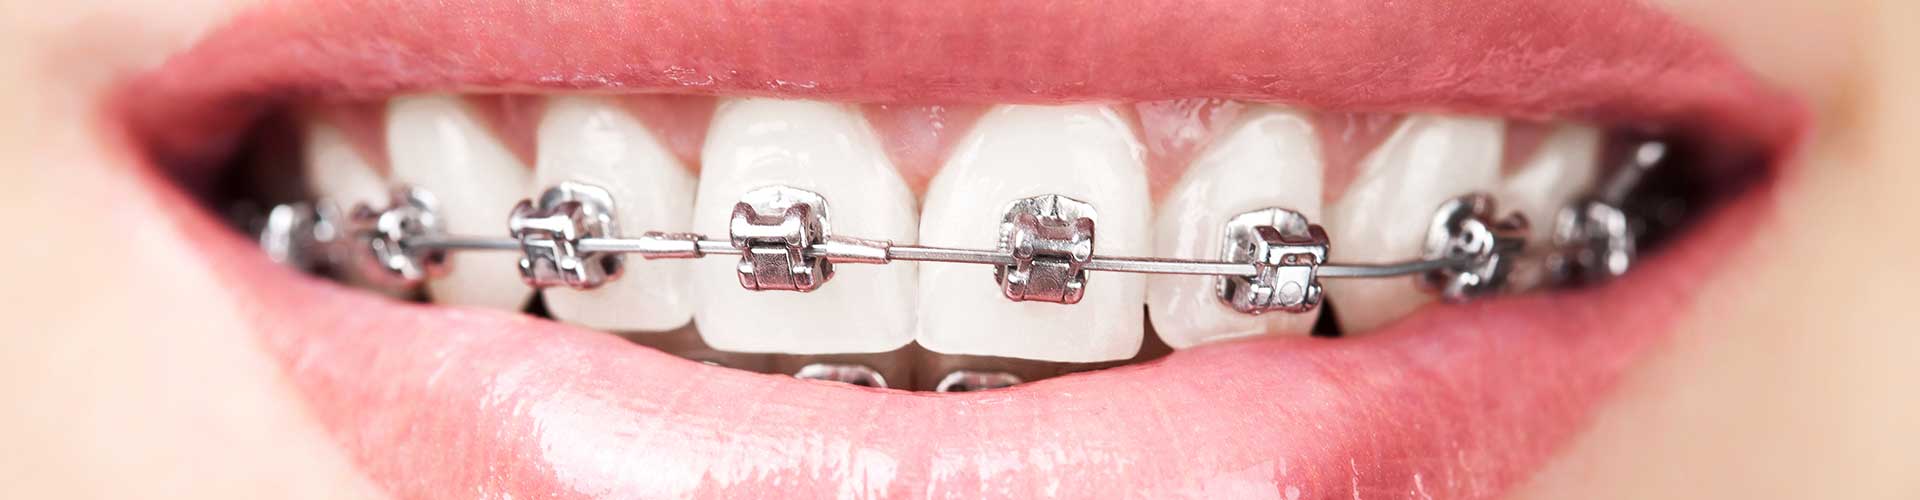 Orthodontics | Tooth Suite Family Dentistry | General Dentist | Lloydminster